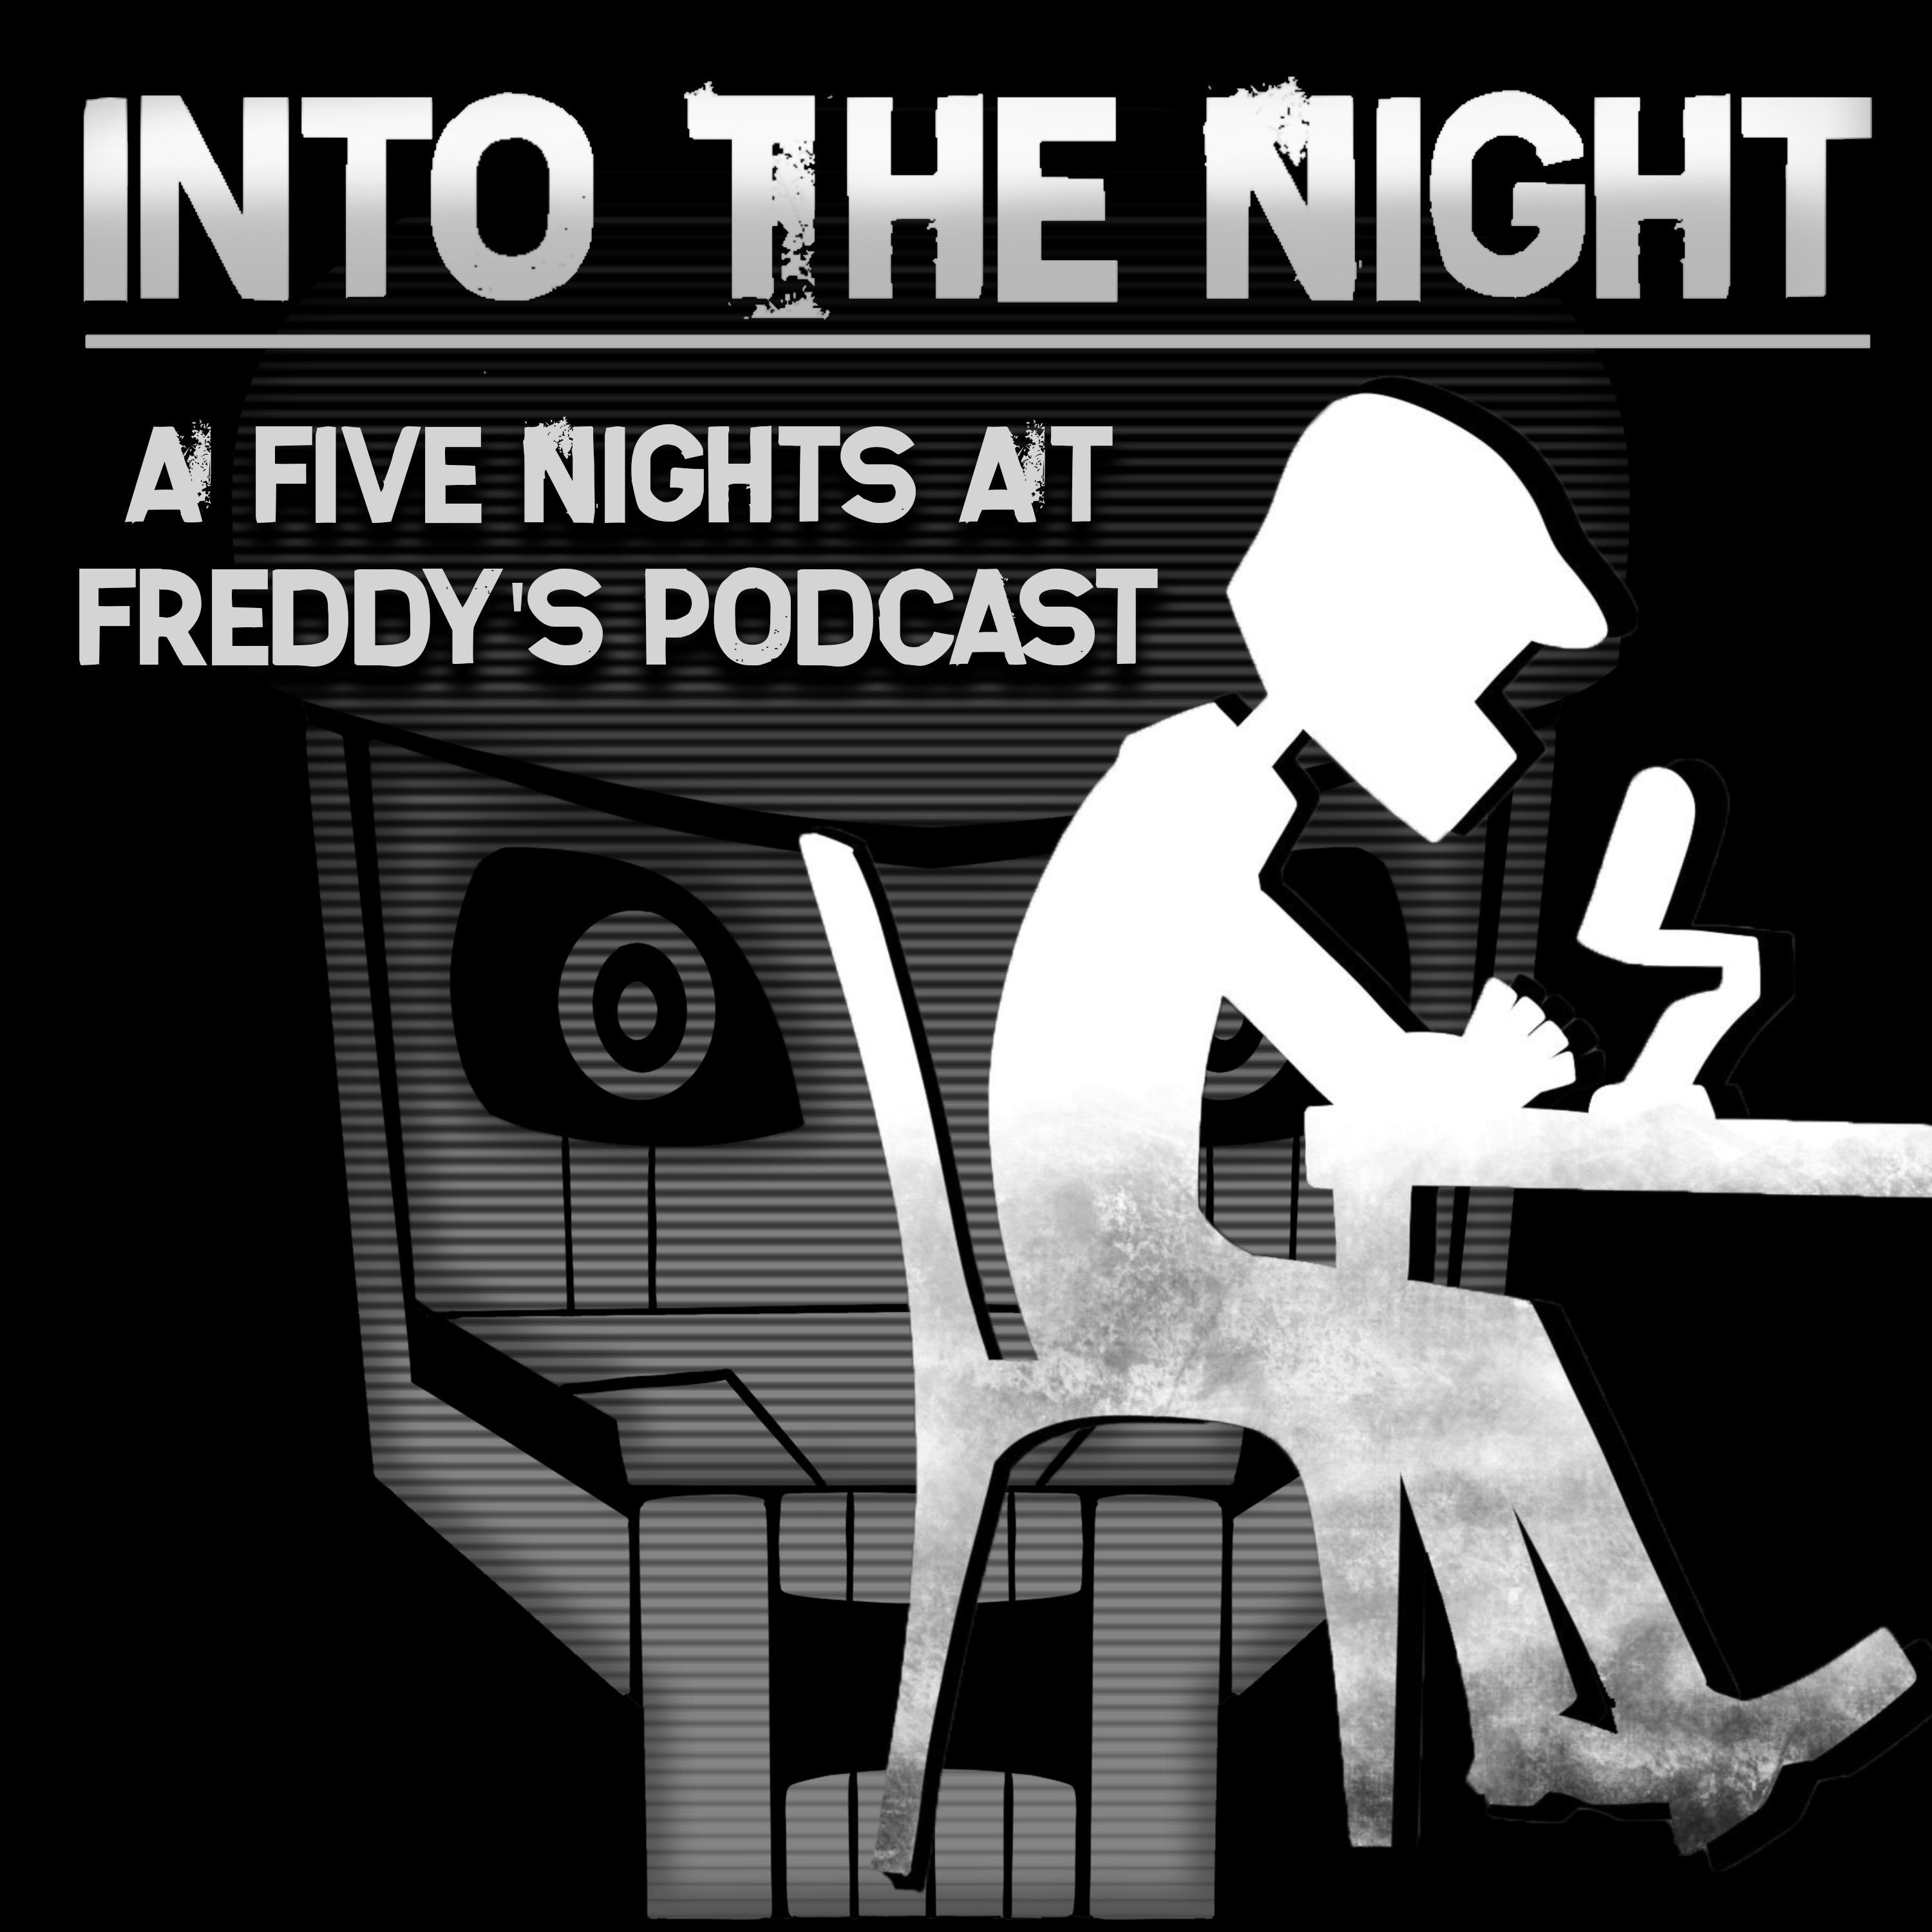 Adventure nightmare fredbear full body  Five nights at freddy's, Fnaf,  Halloween horror movies